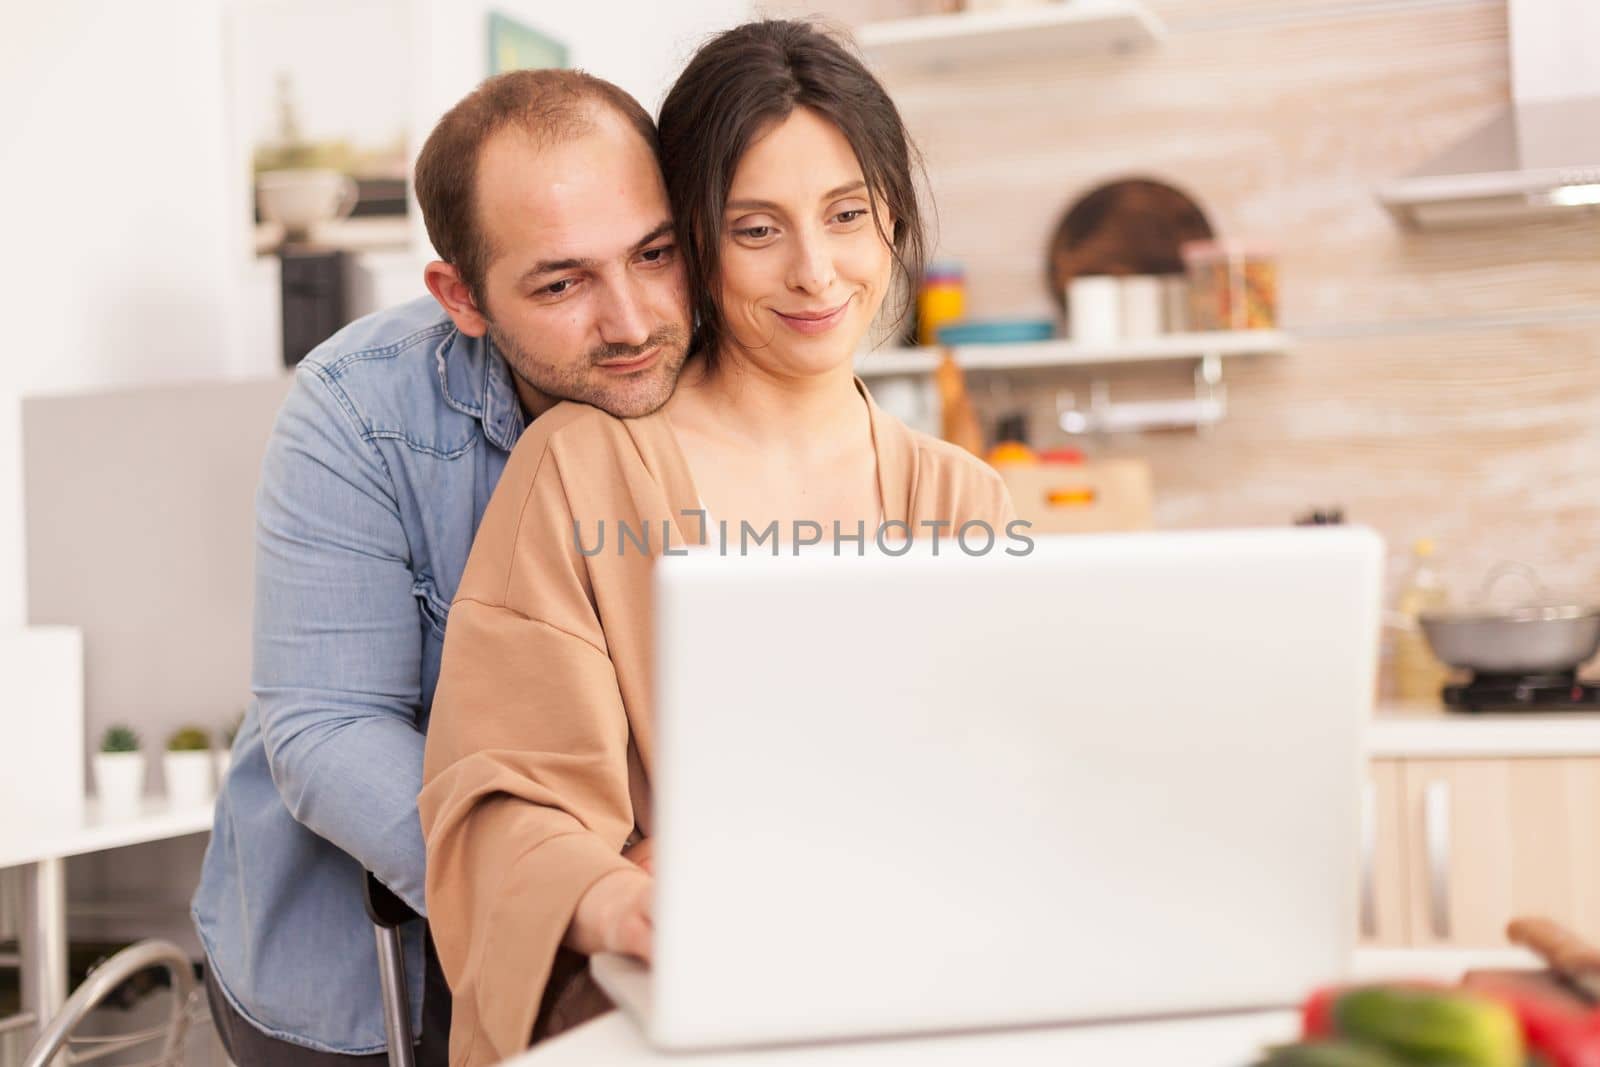 Smiling couple using laptop by DCStudio